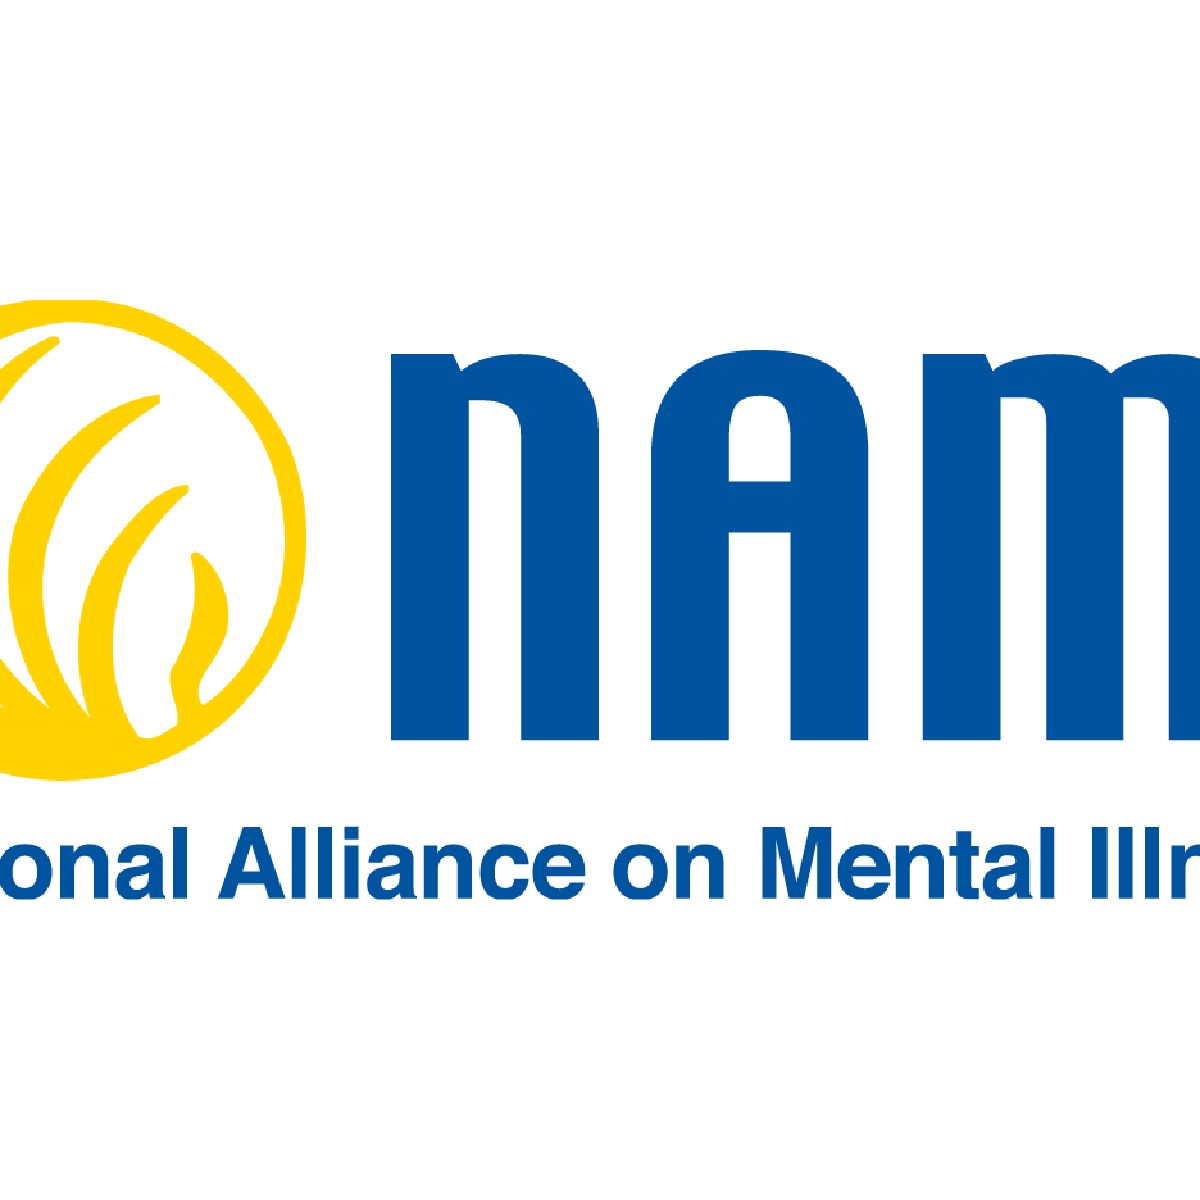 County Nami Organization Gains Official Status News